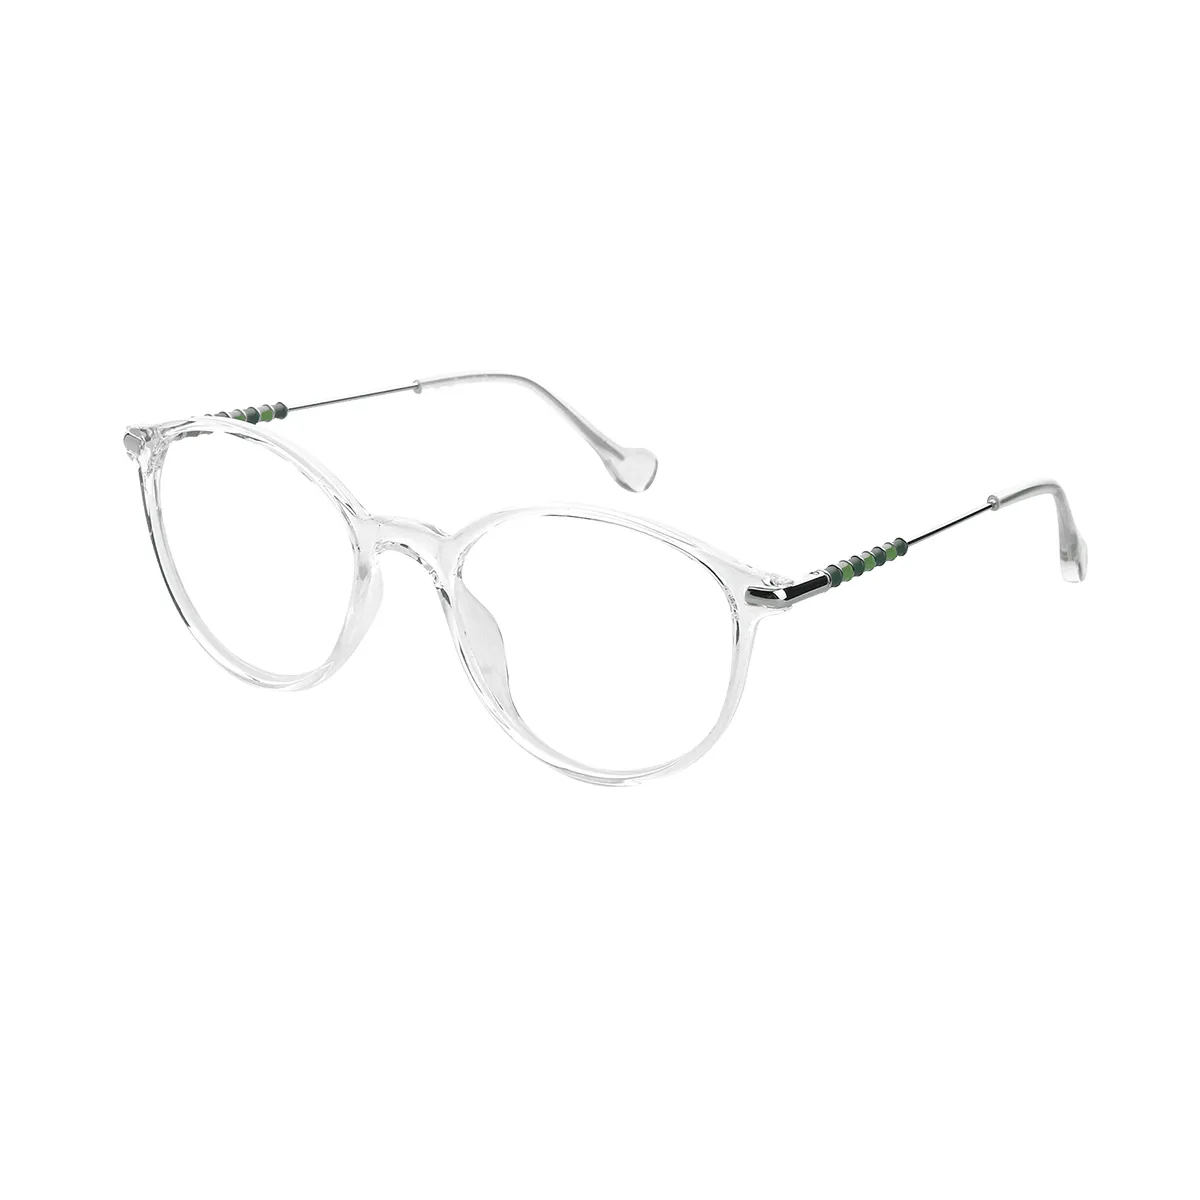 Maxine - Round Translucent Glasses for Women